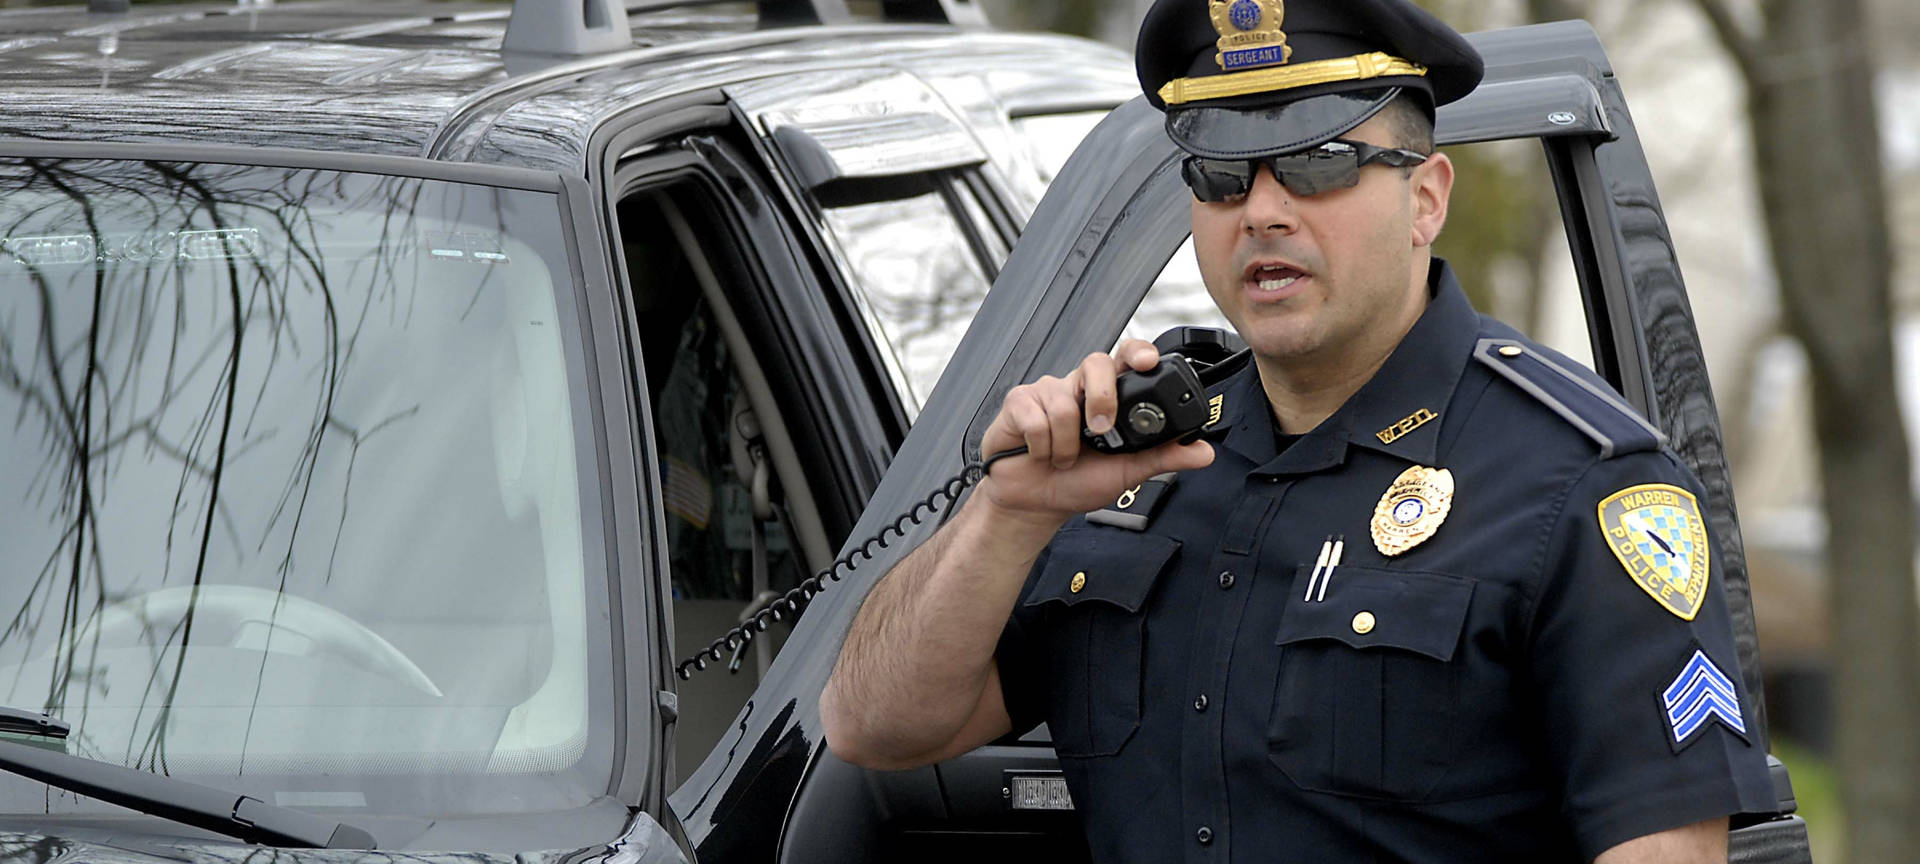 Politibetjent taler i radio: 